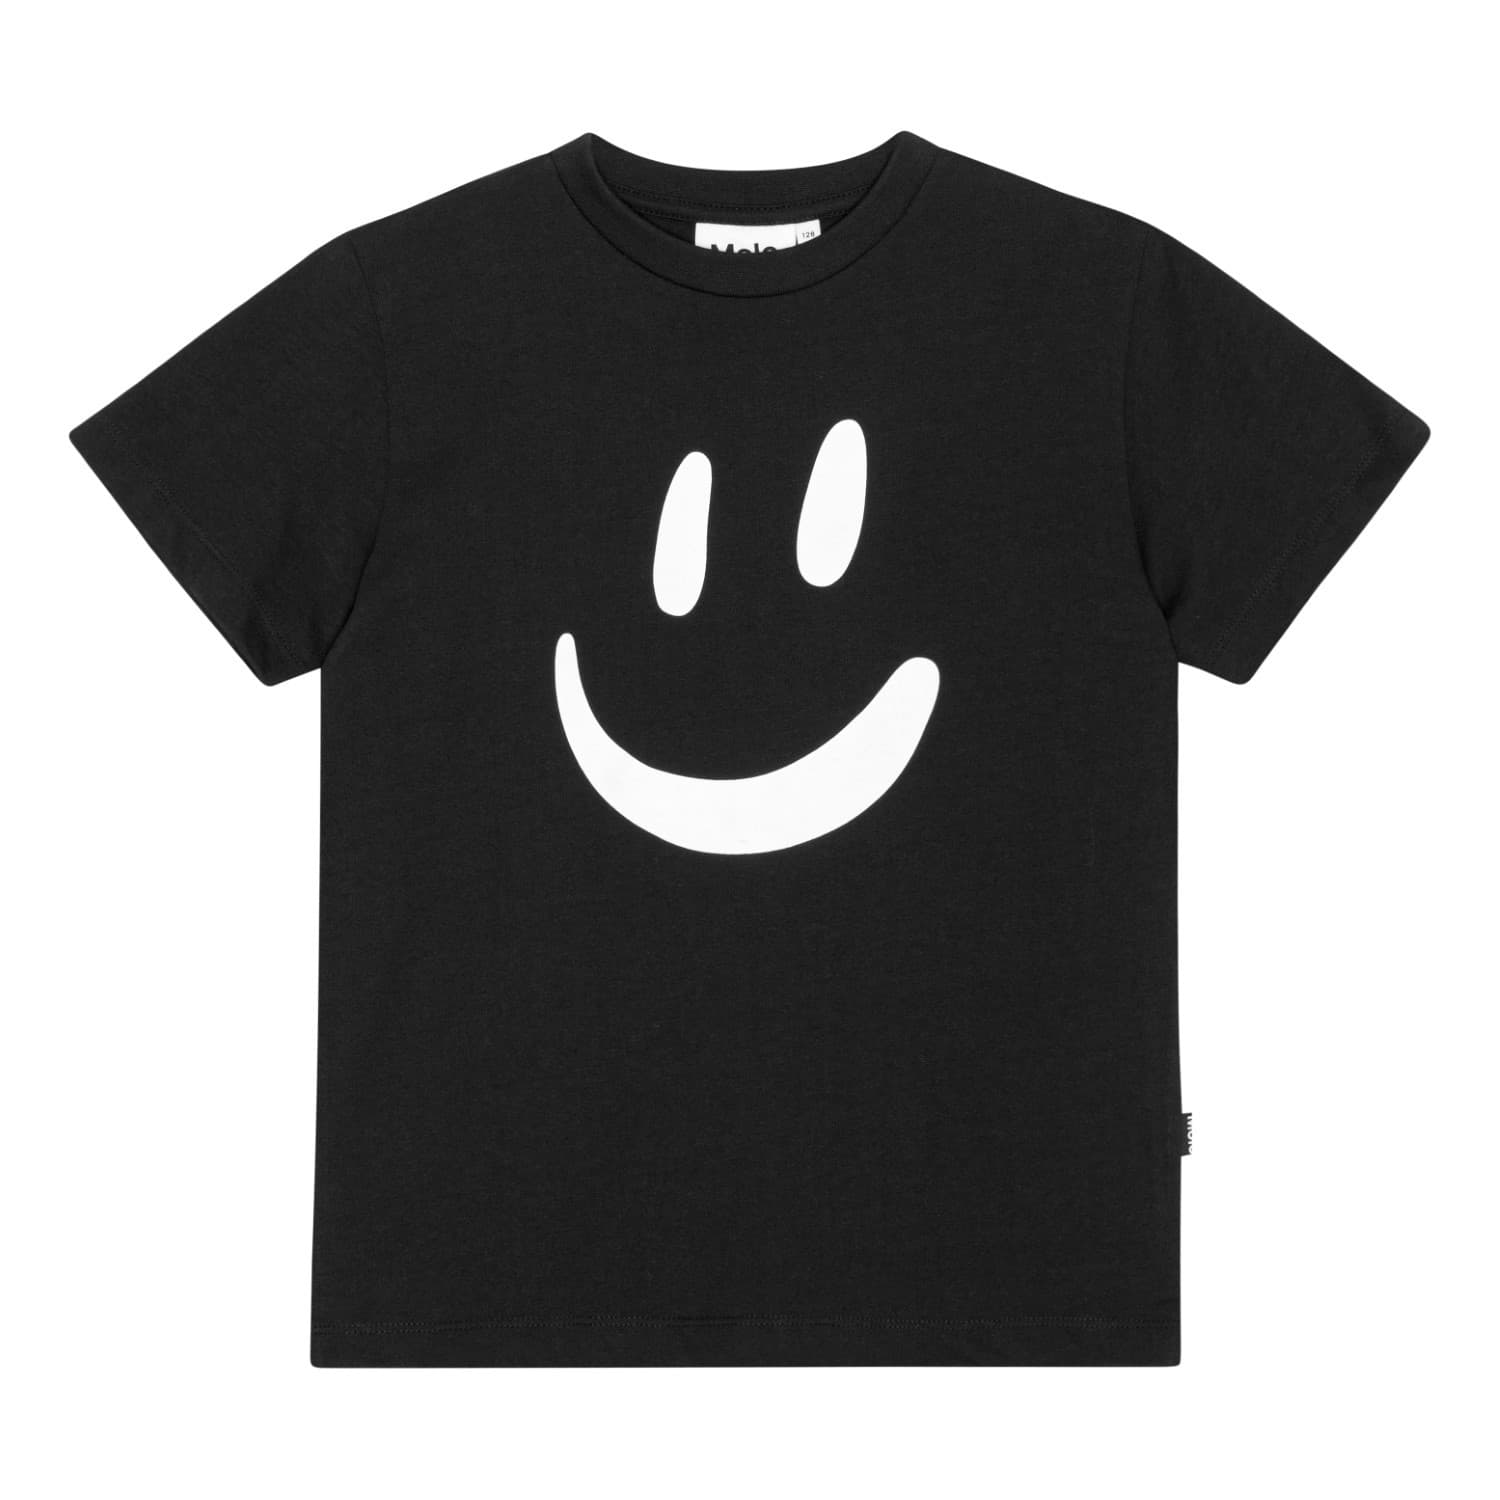 Roxo T-shirt Smiley (Black)